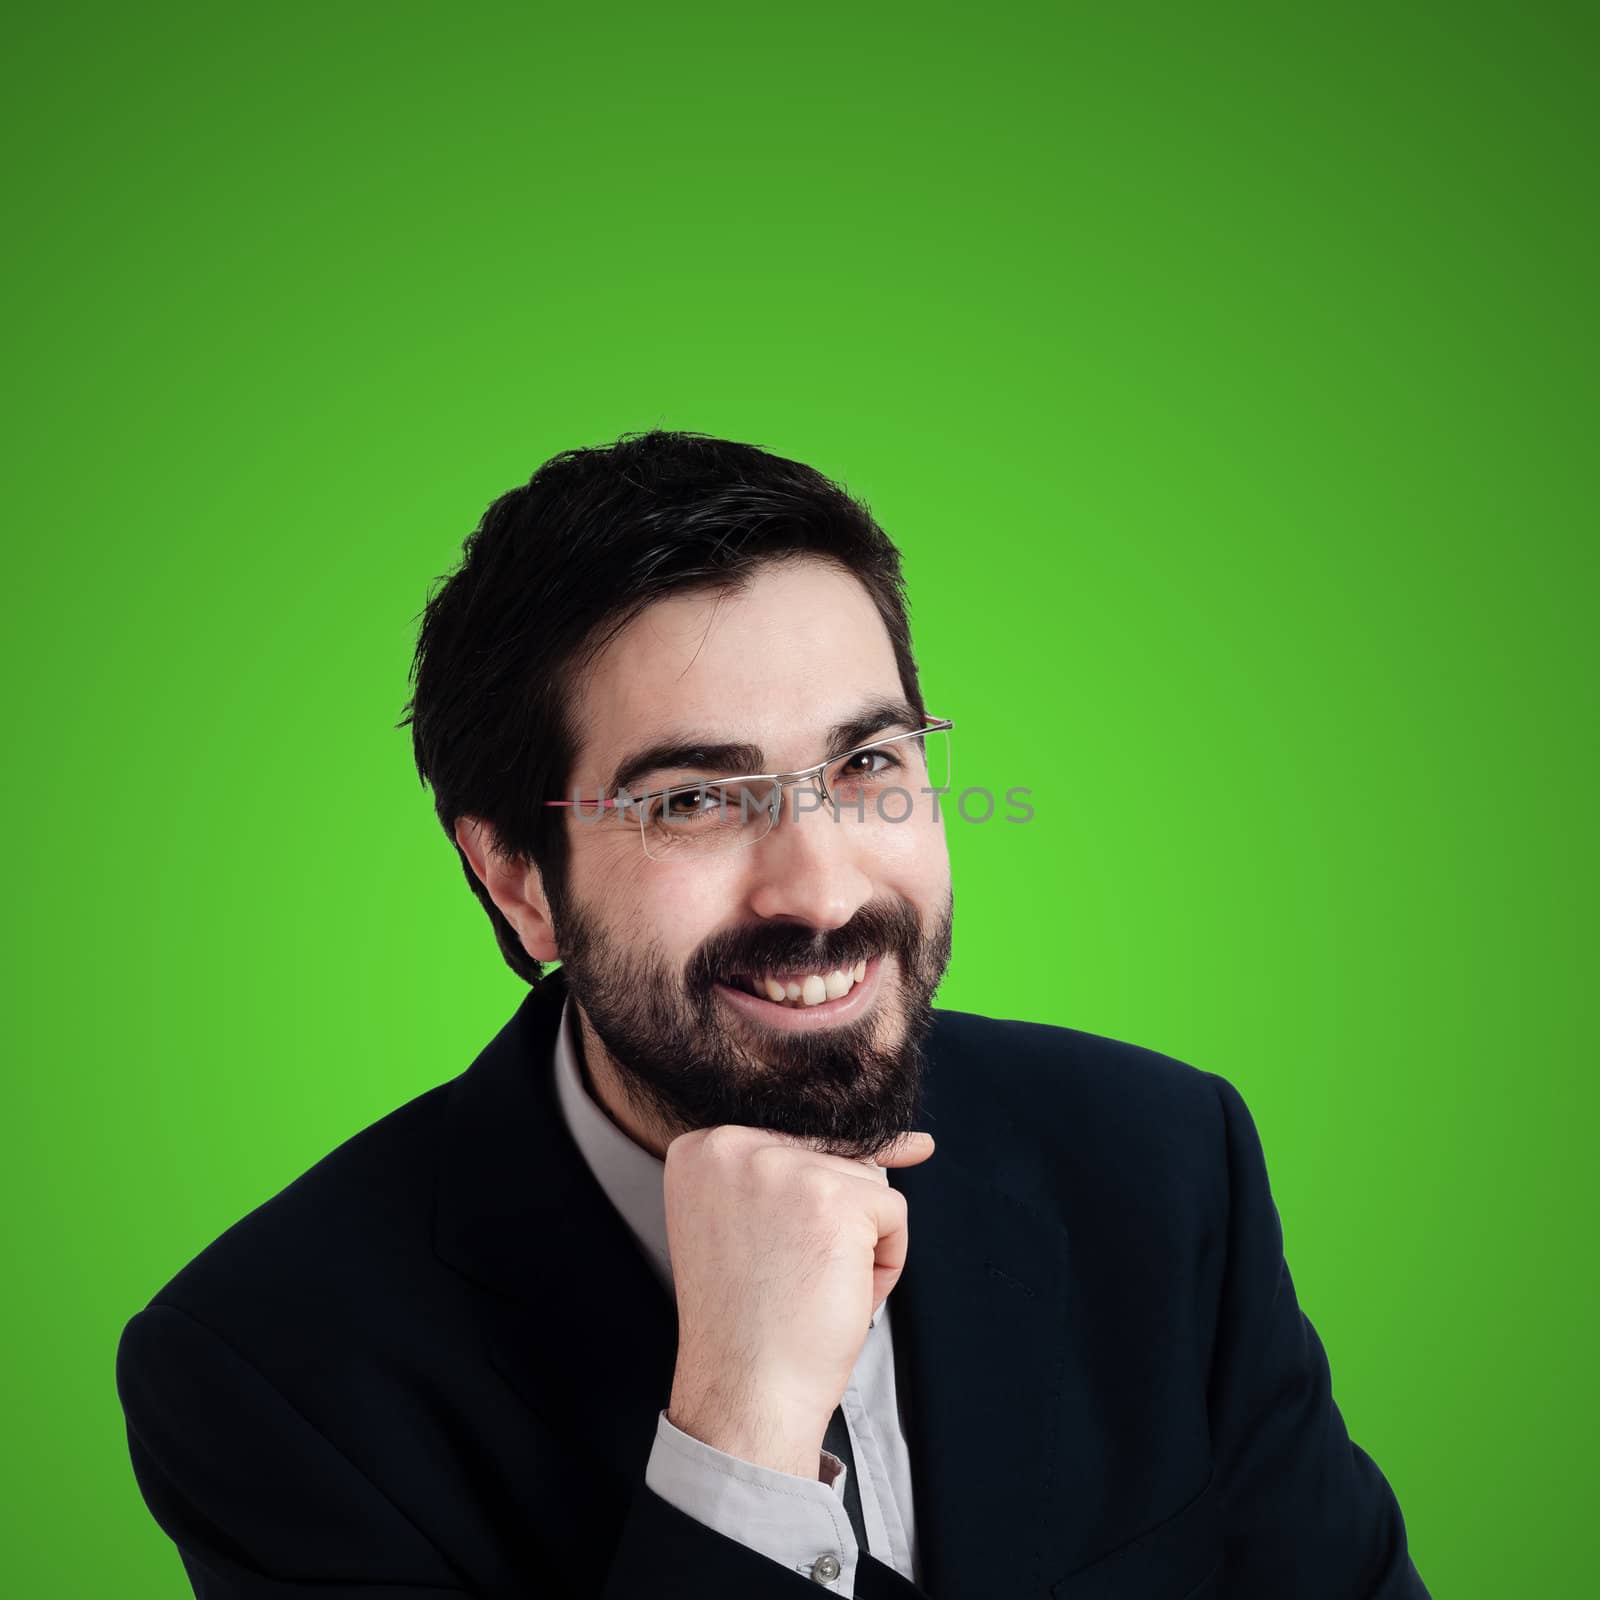 smiling businessman on green background